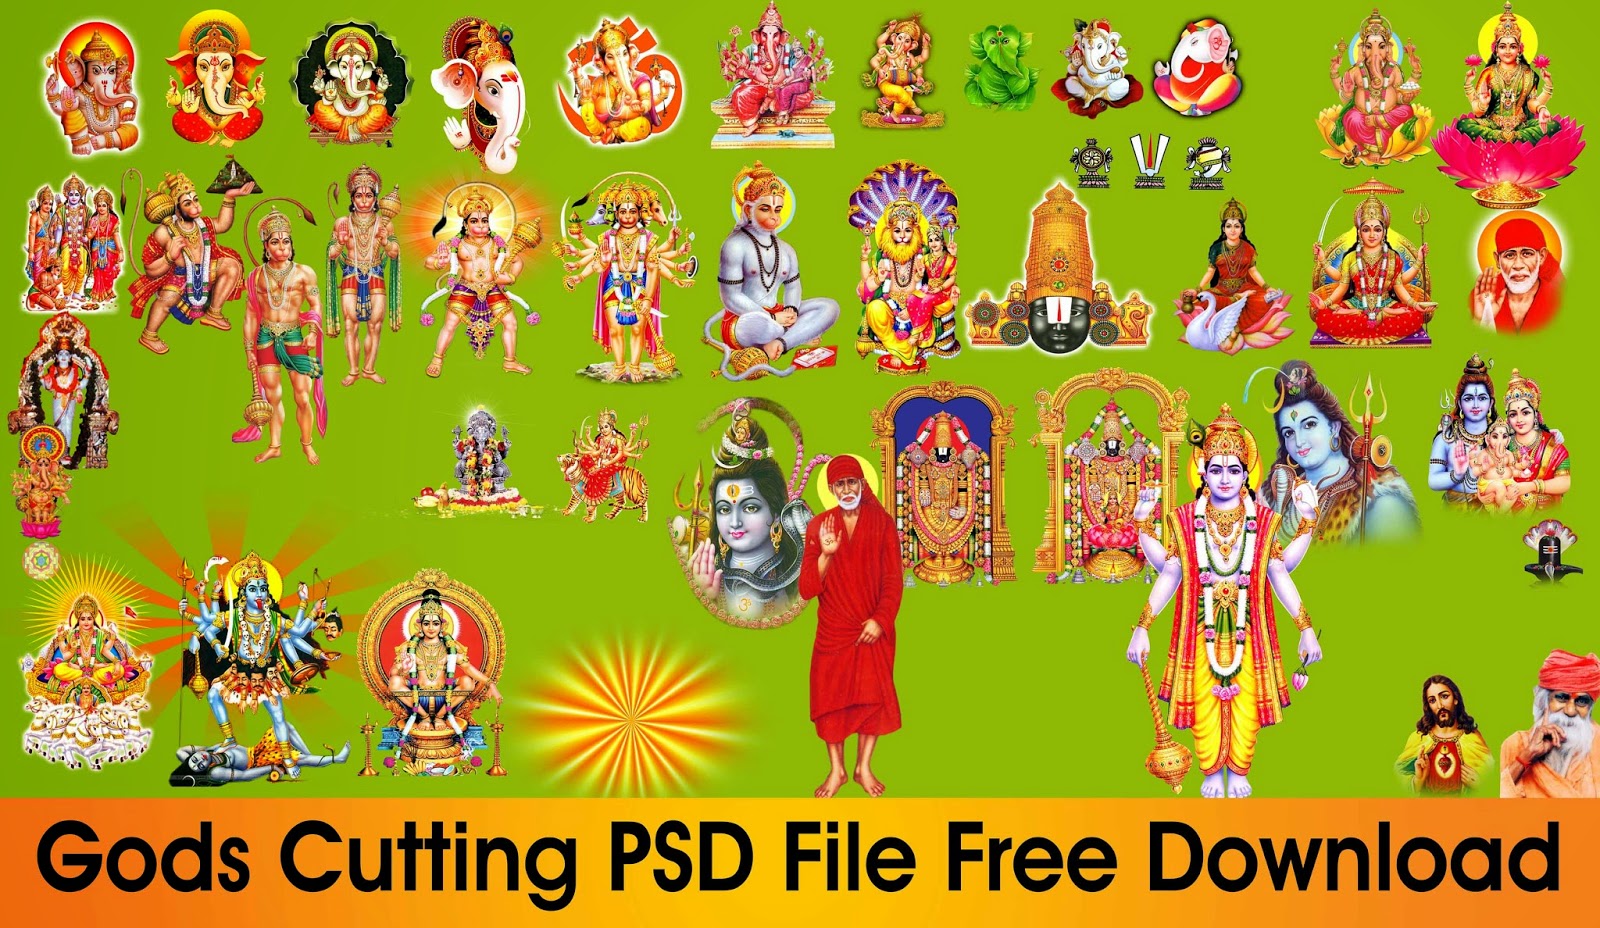 All Free Download Psd File - HD Wallpaper 